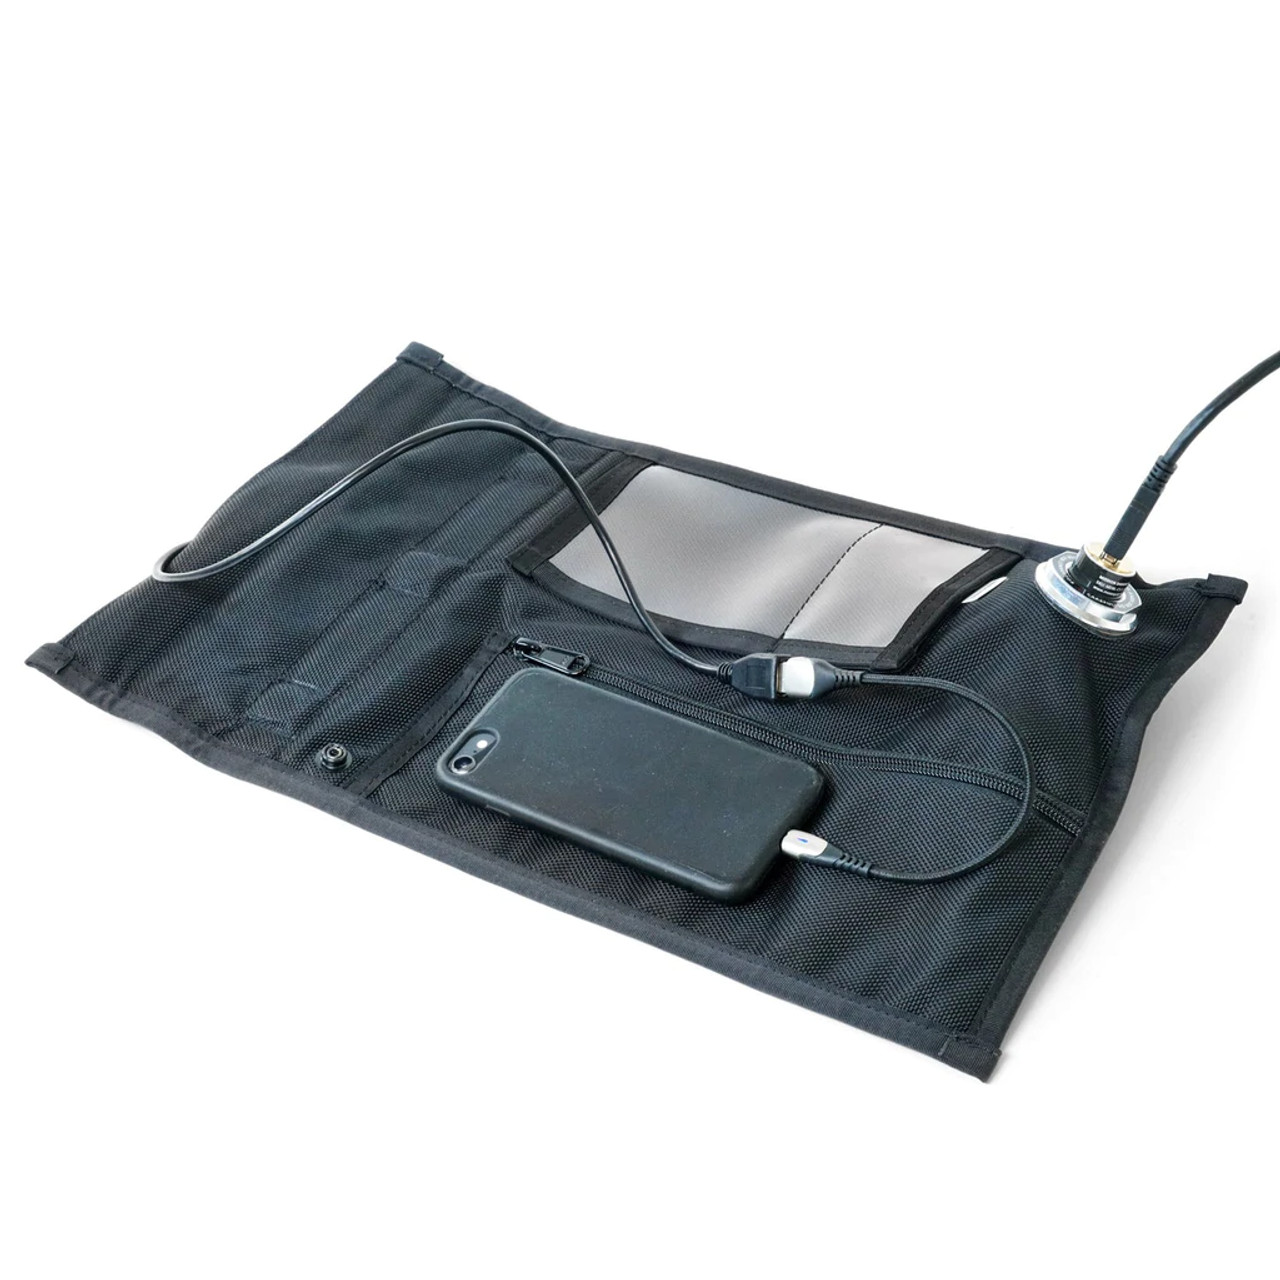 Non-Window Faraday Bag for Phones 